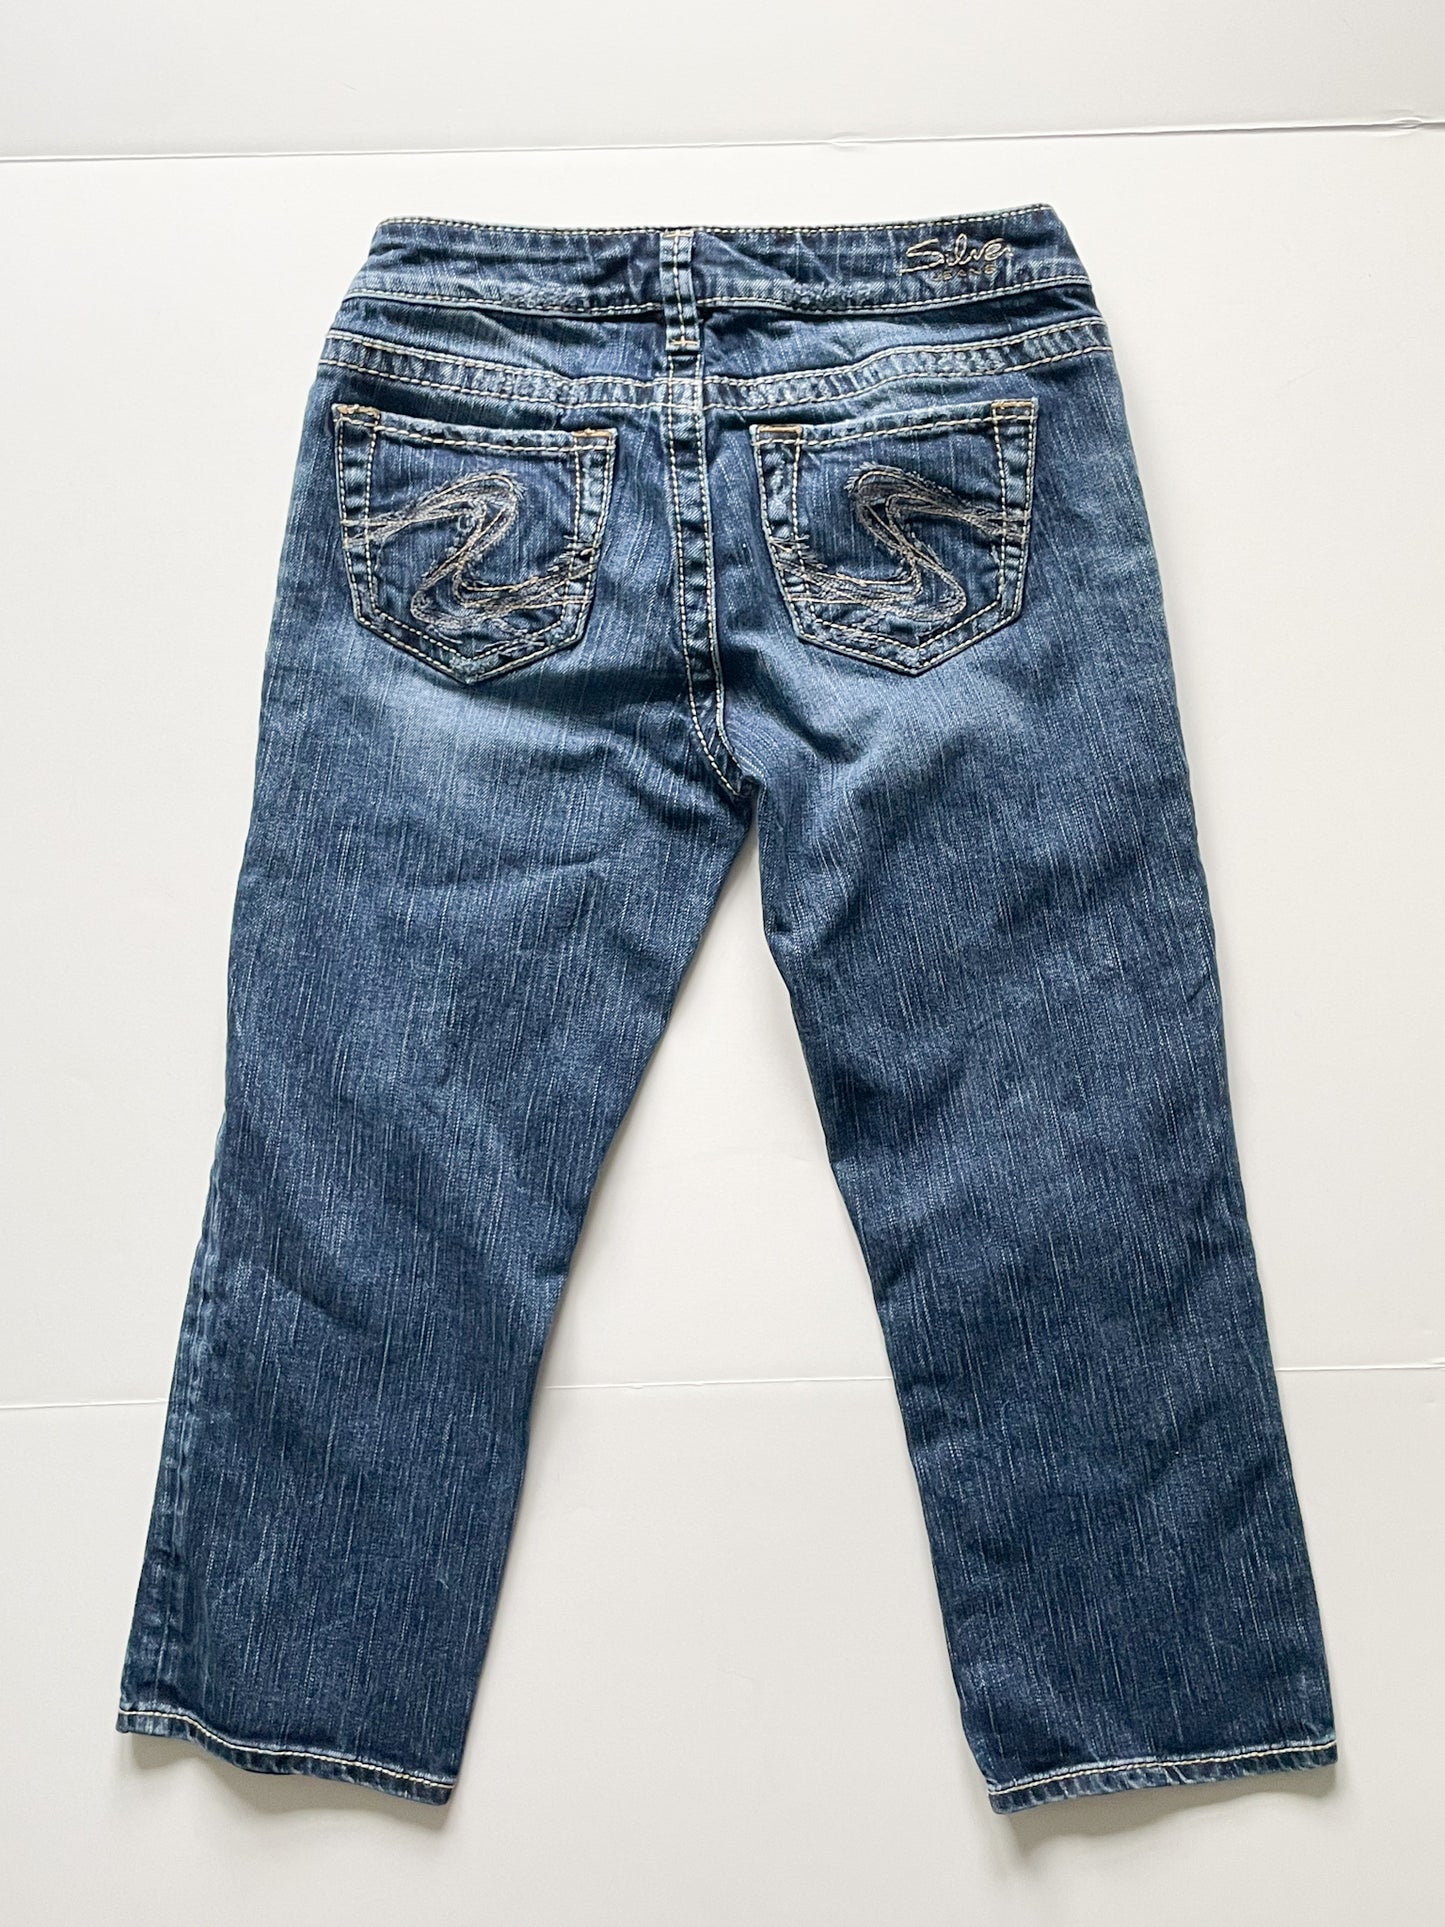 SILVER JEANS CO Aiko Mid-Rise Dark Wash Cropped Capri Straight Leg Jeans - Size 27